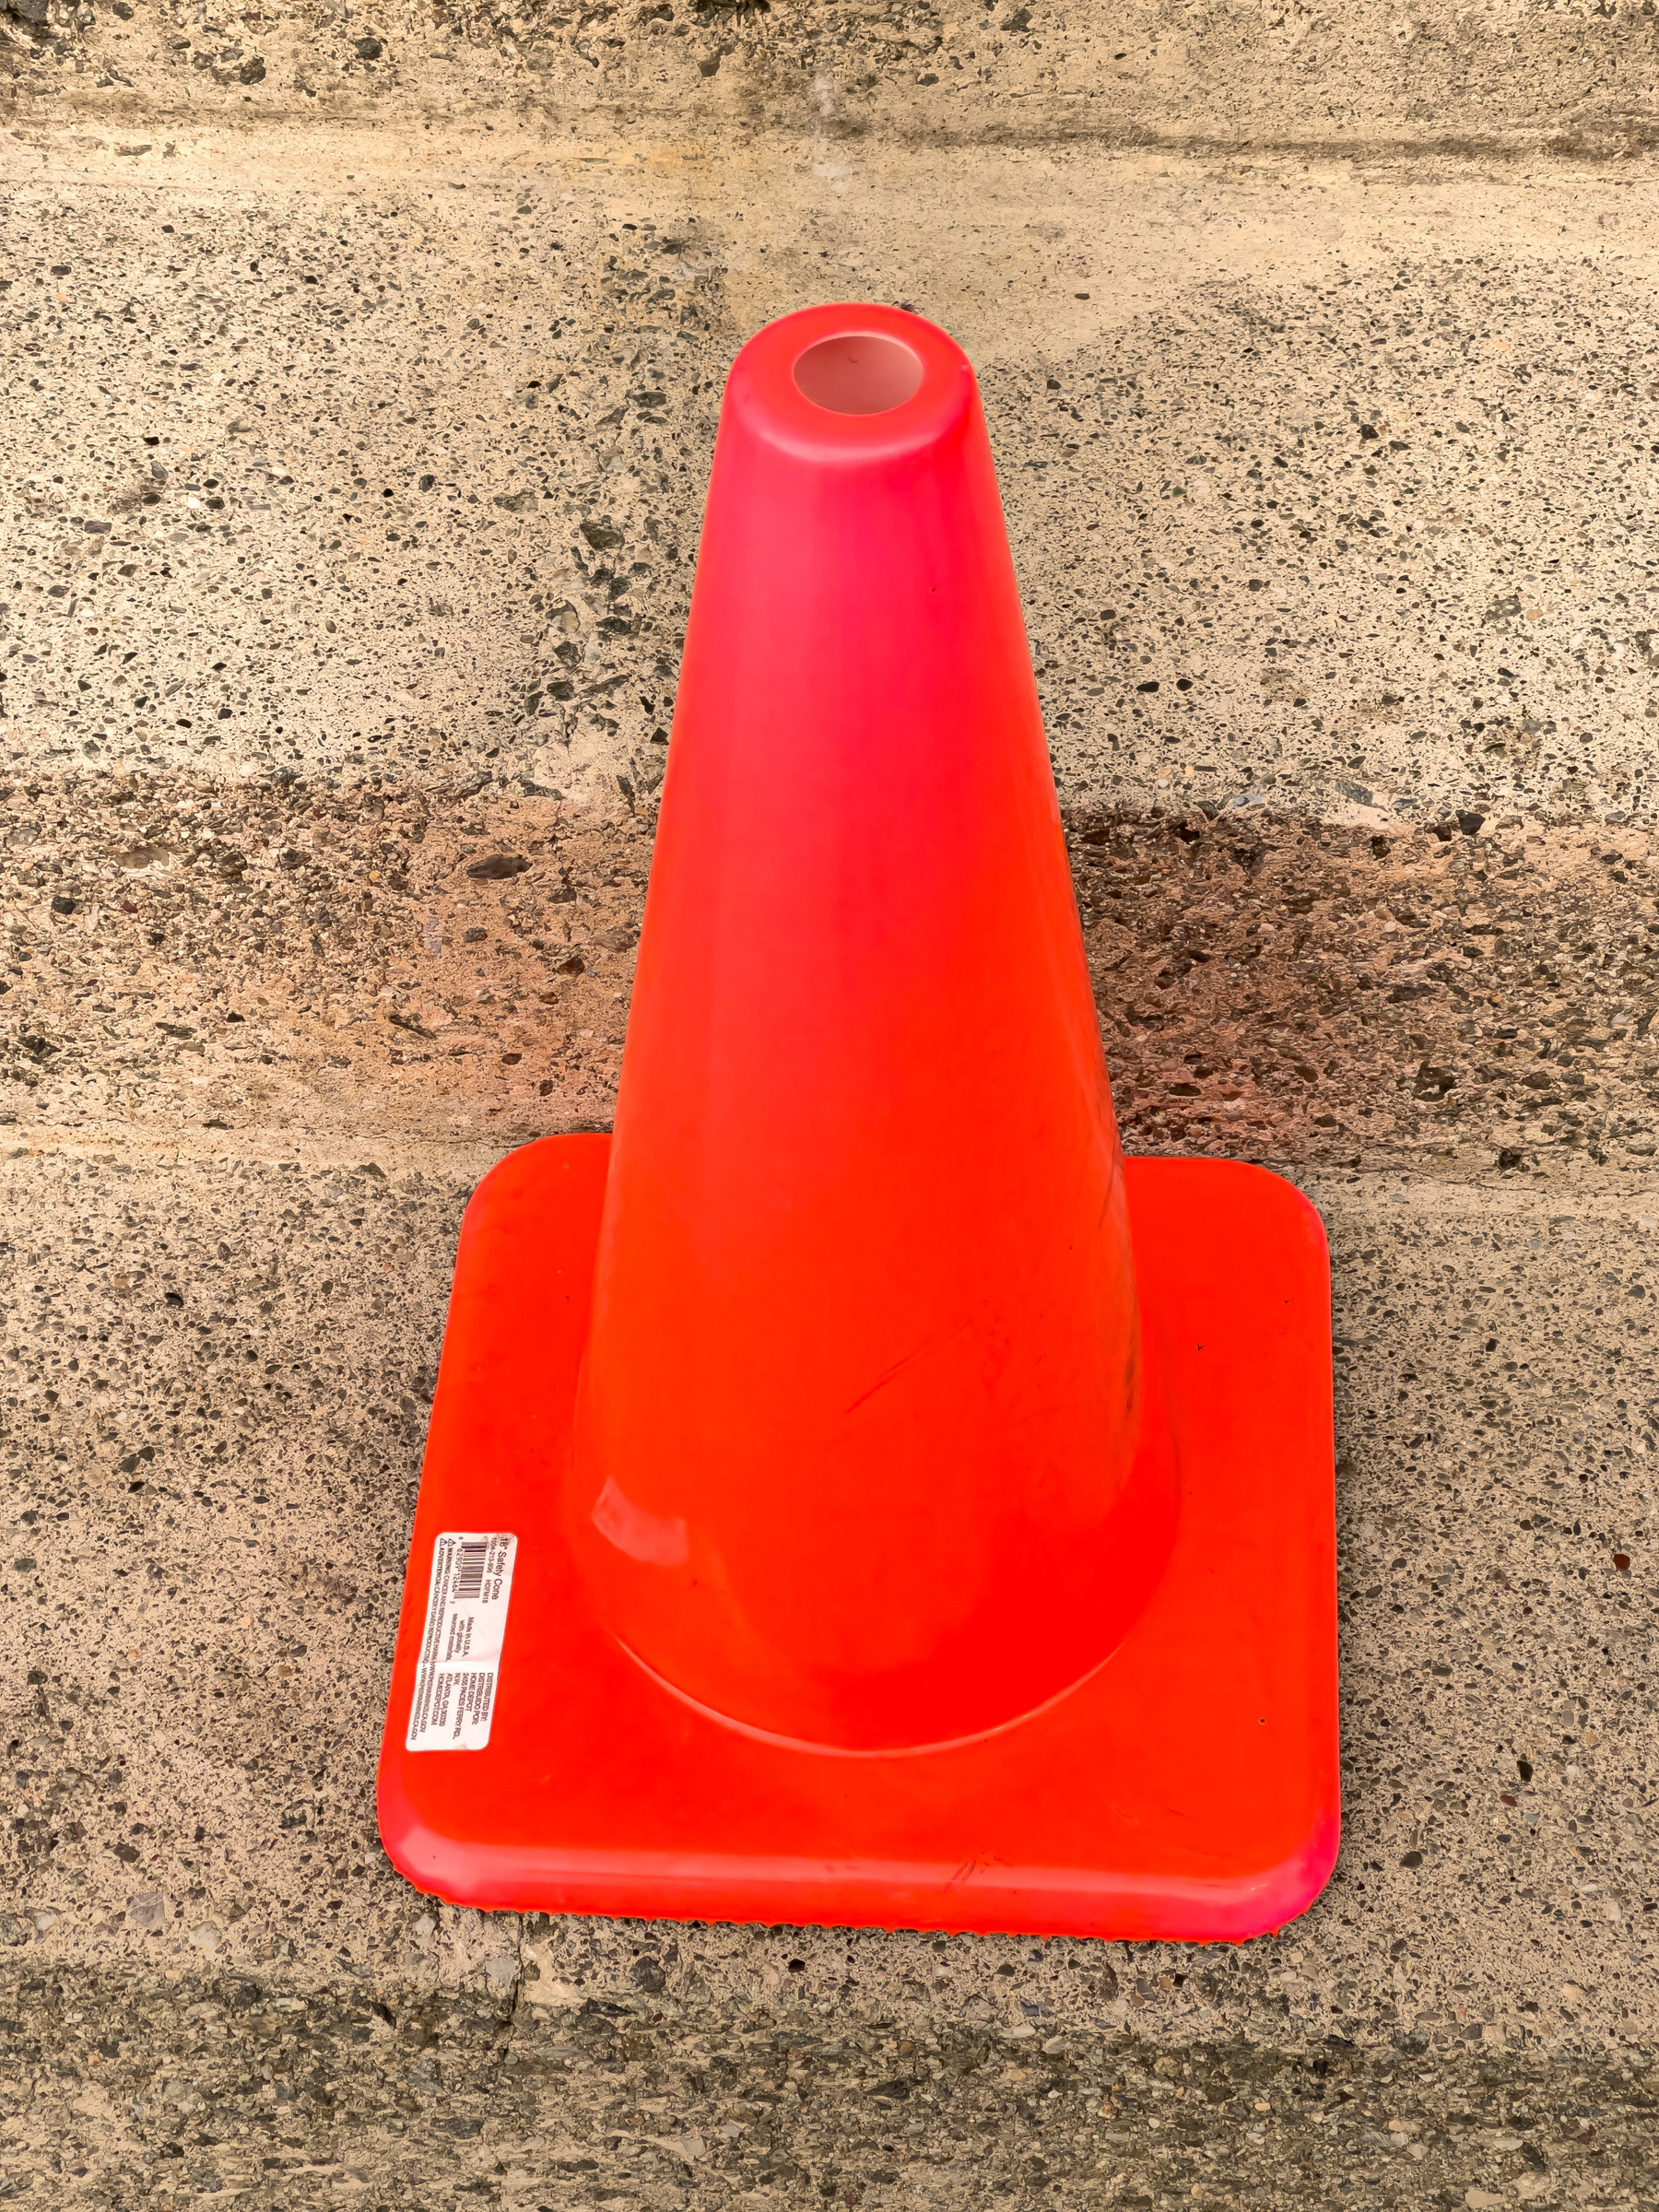 Orange/Red traffic cone on concrete steps.